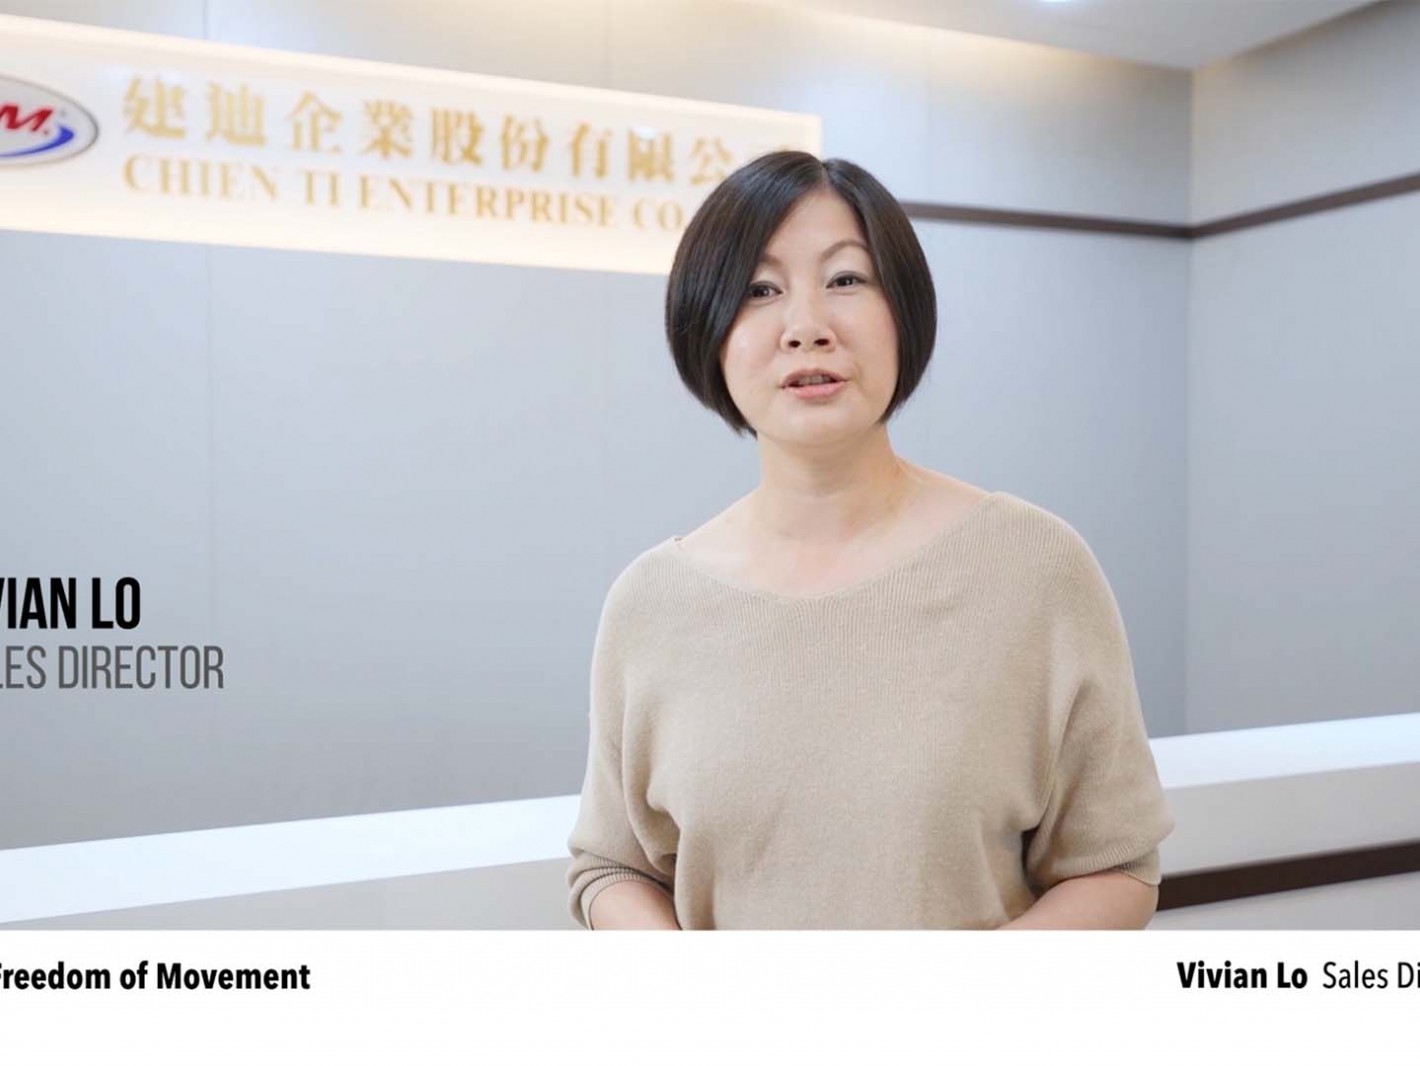 Vivian Lo, Sales Director, Chien Ti Enterprise Co., Ltd. presented on the topic of "Freedom of Movement."